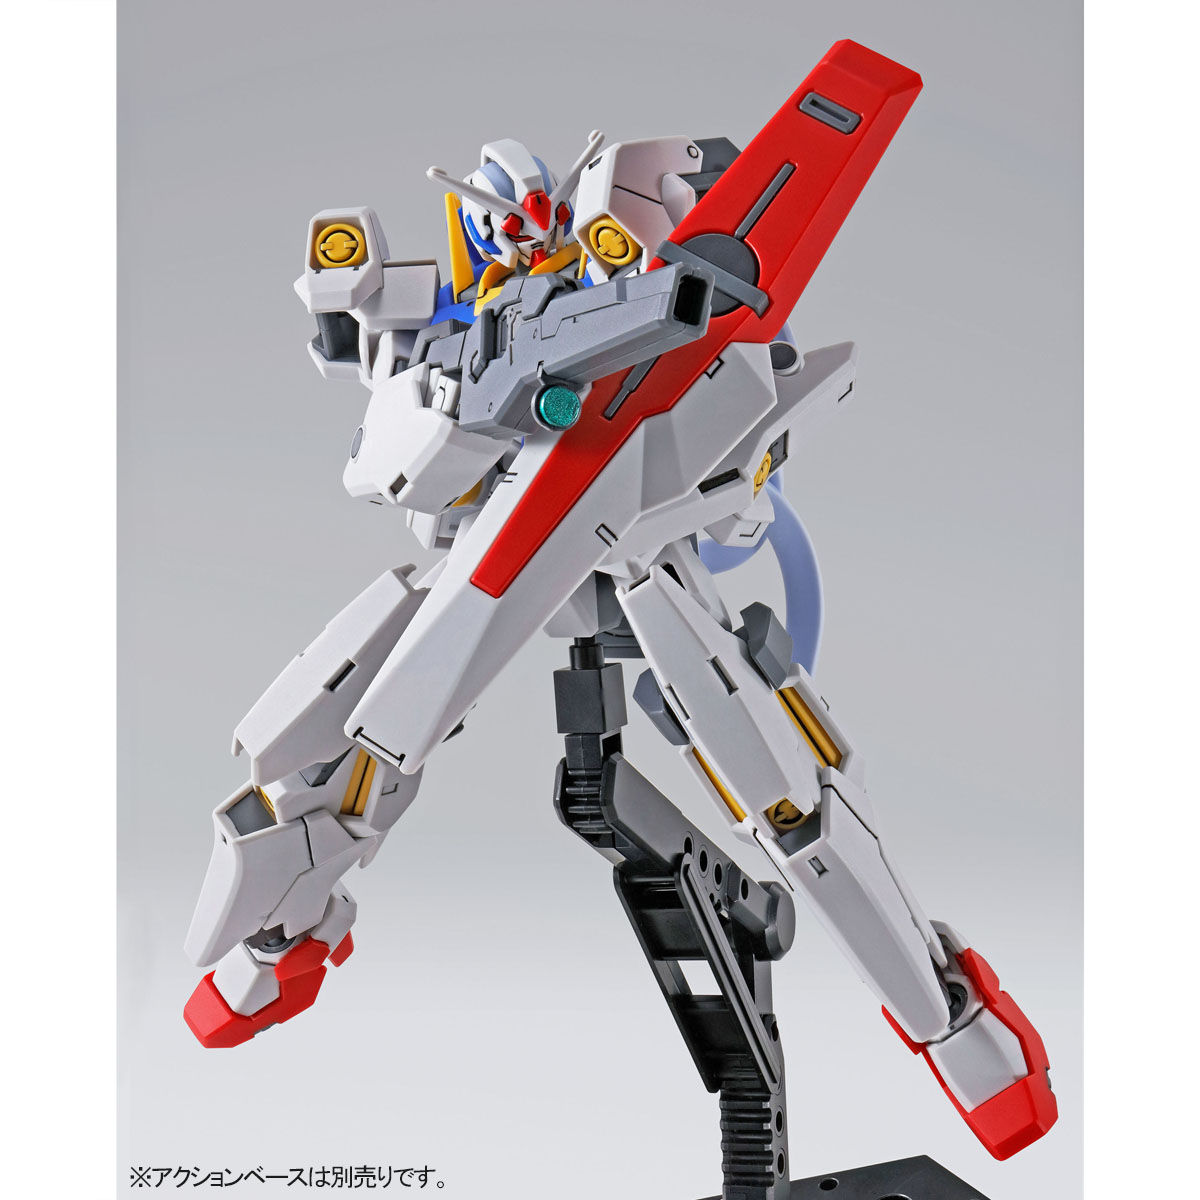 HG00 1/144 GNY-004 Gundam Plutone